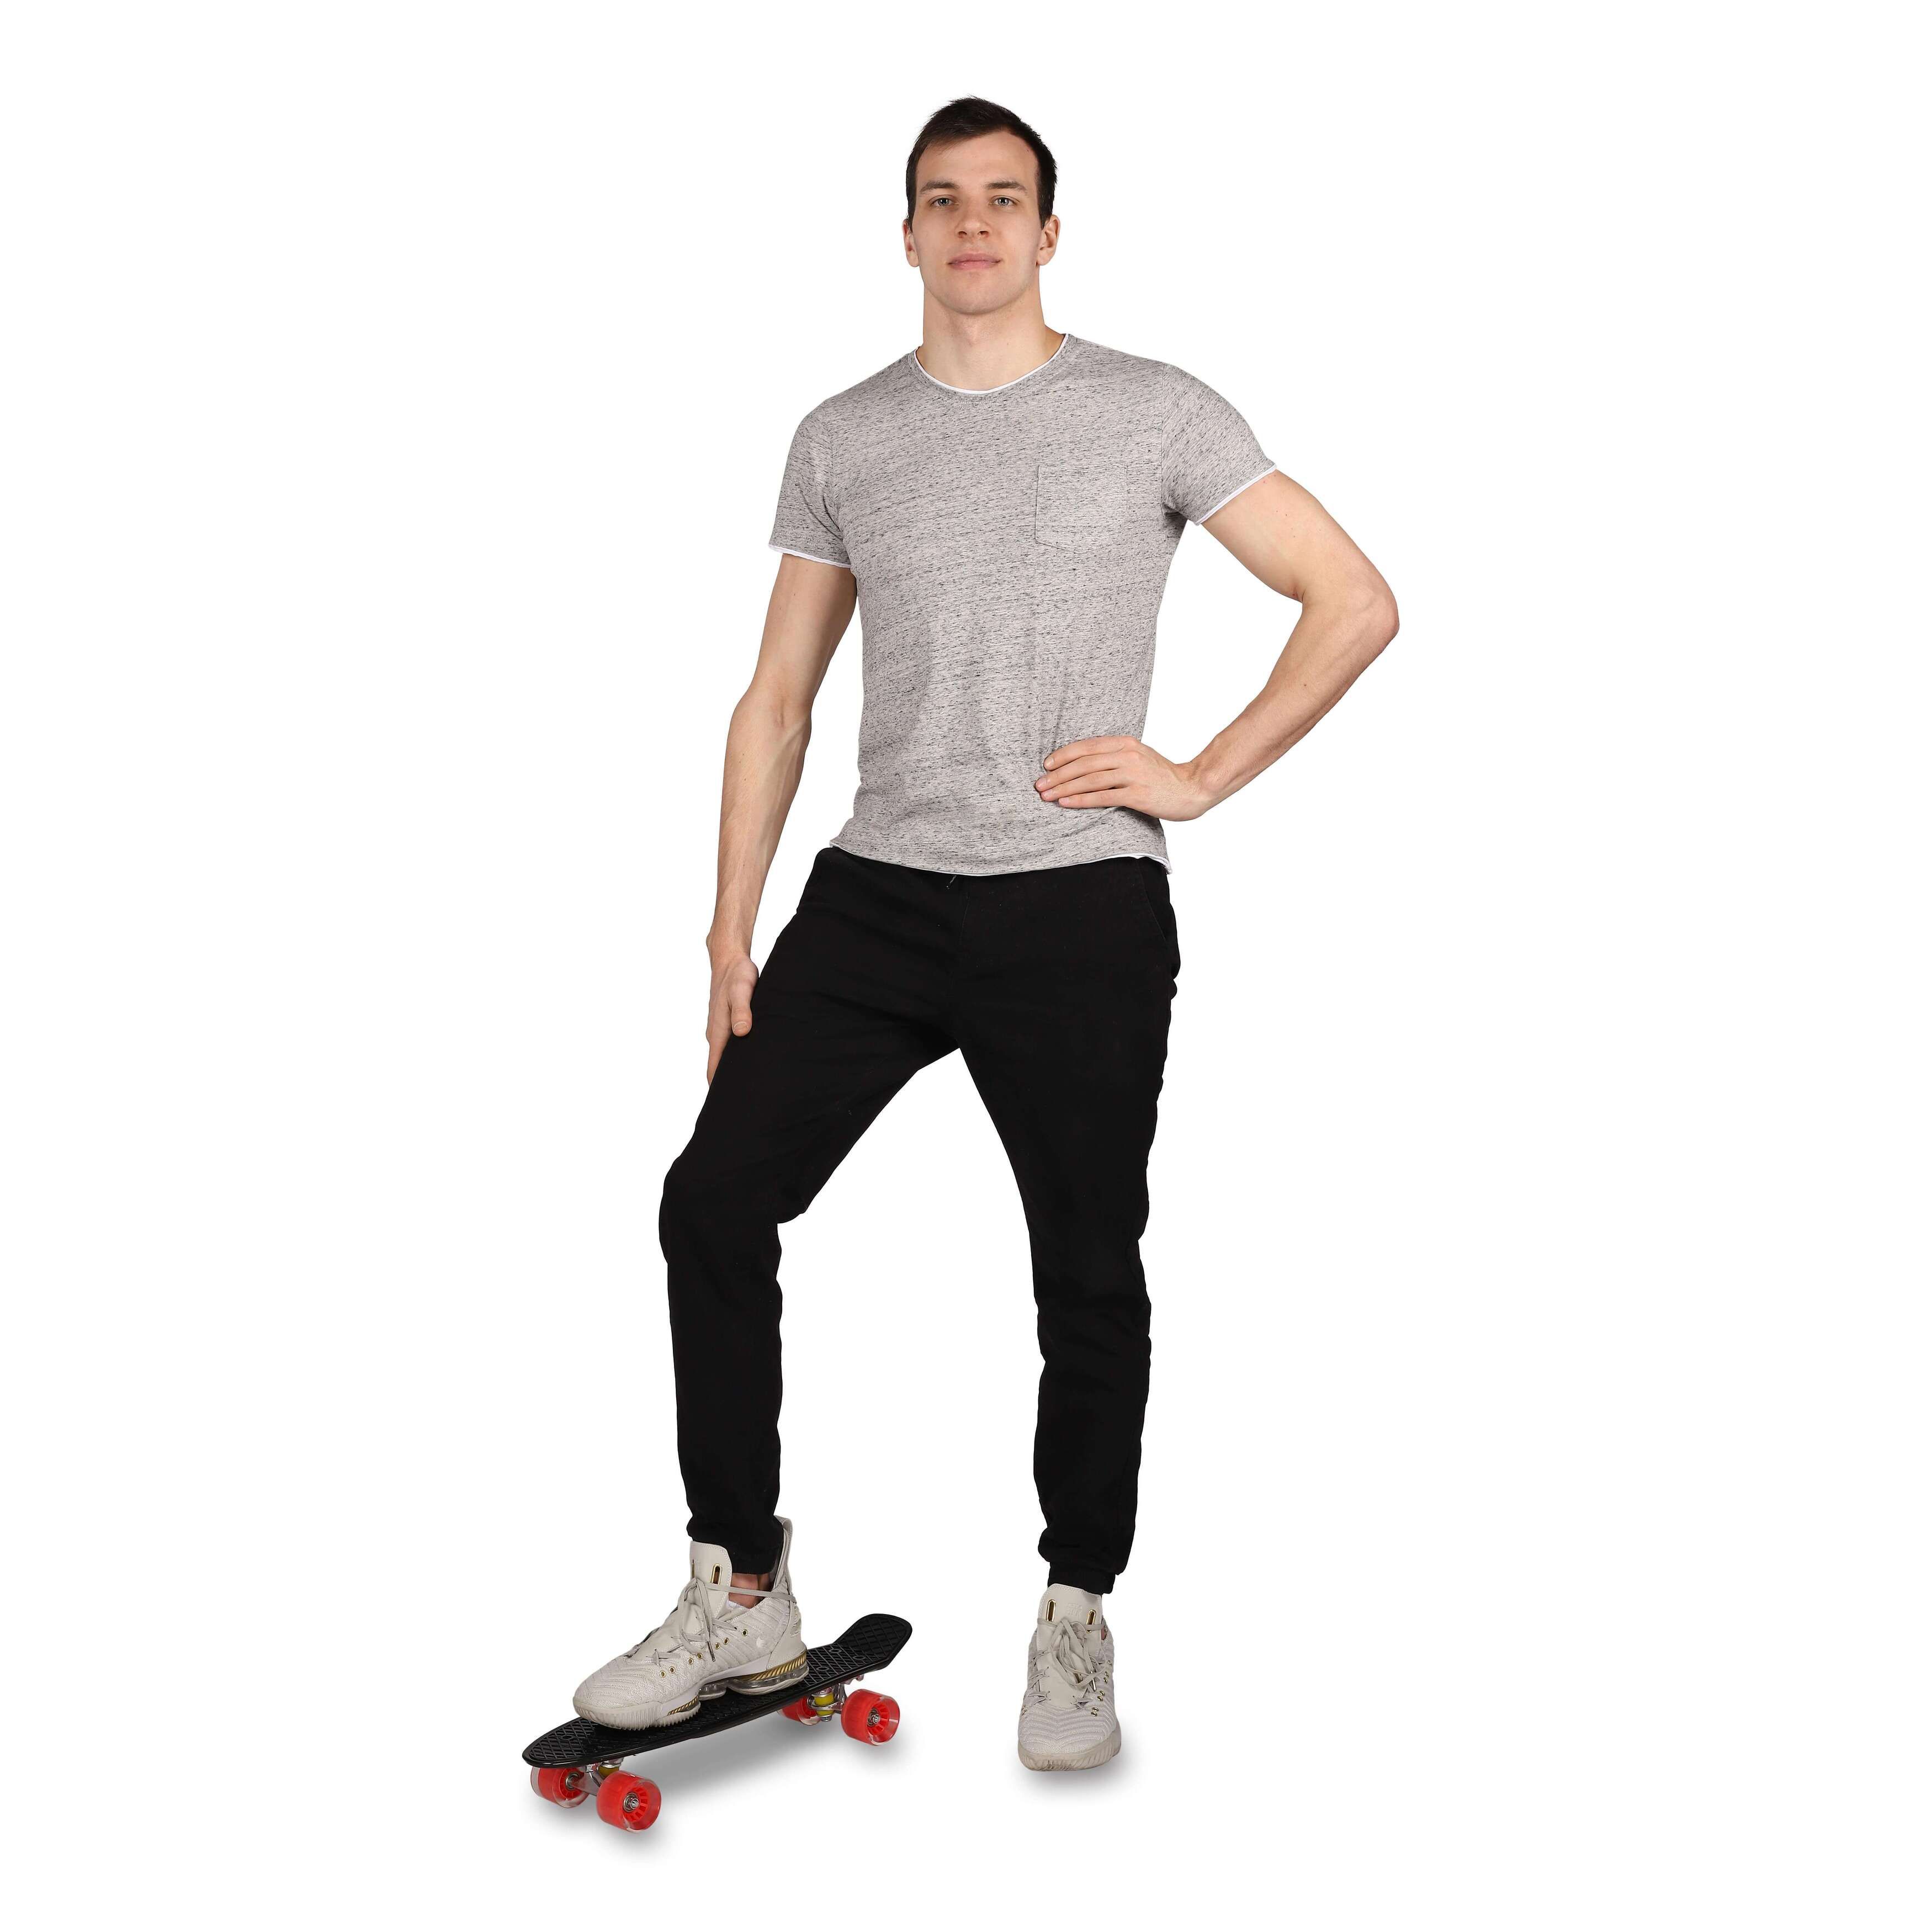 Skateboard de PU Infantil SPLASH INDIGO 56,5 * 15 cm